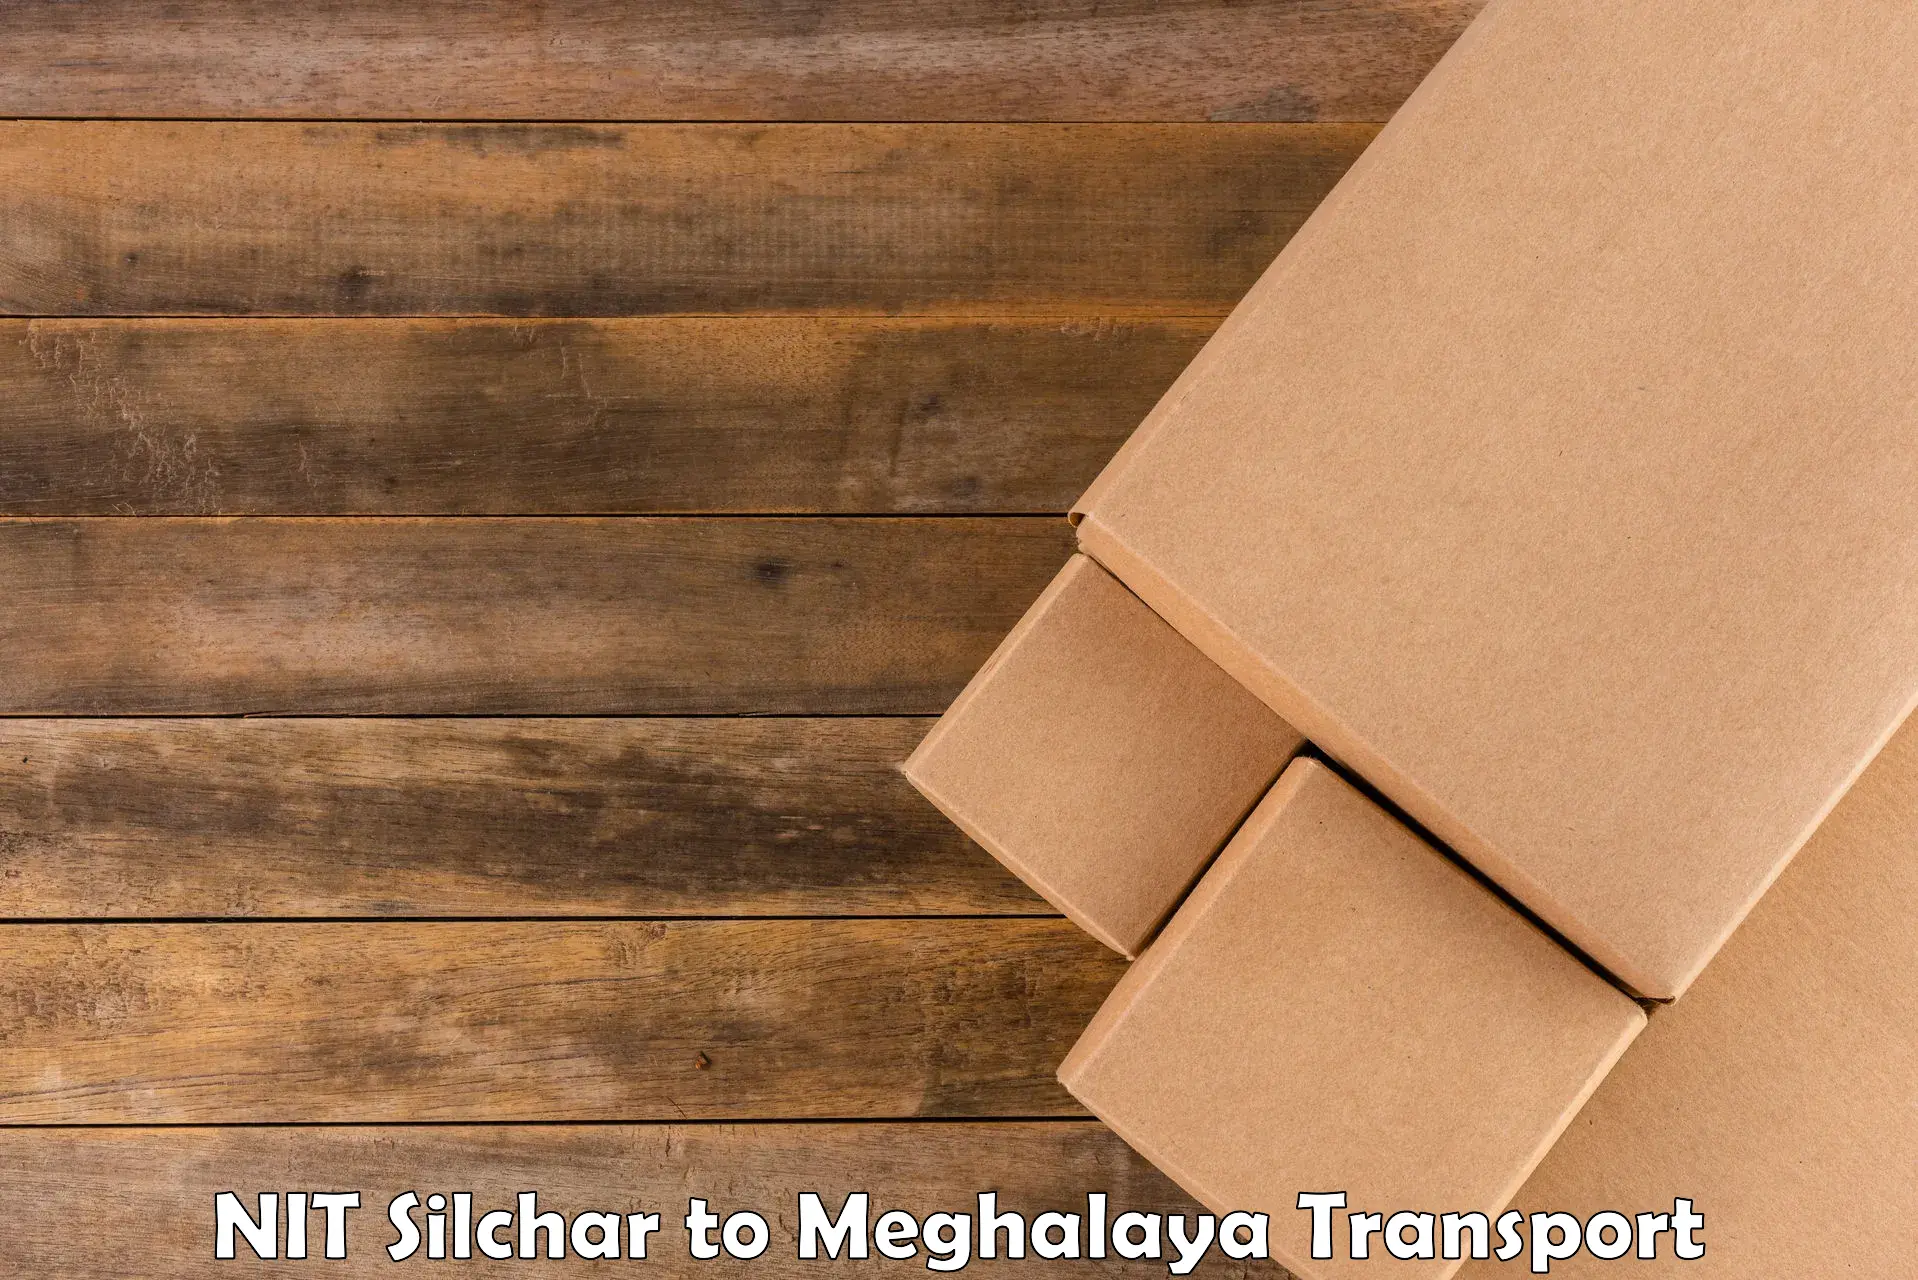 Delivery service NIT Silchar to Cherrapunji